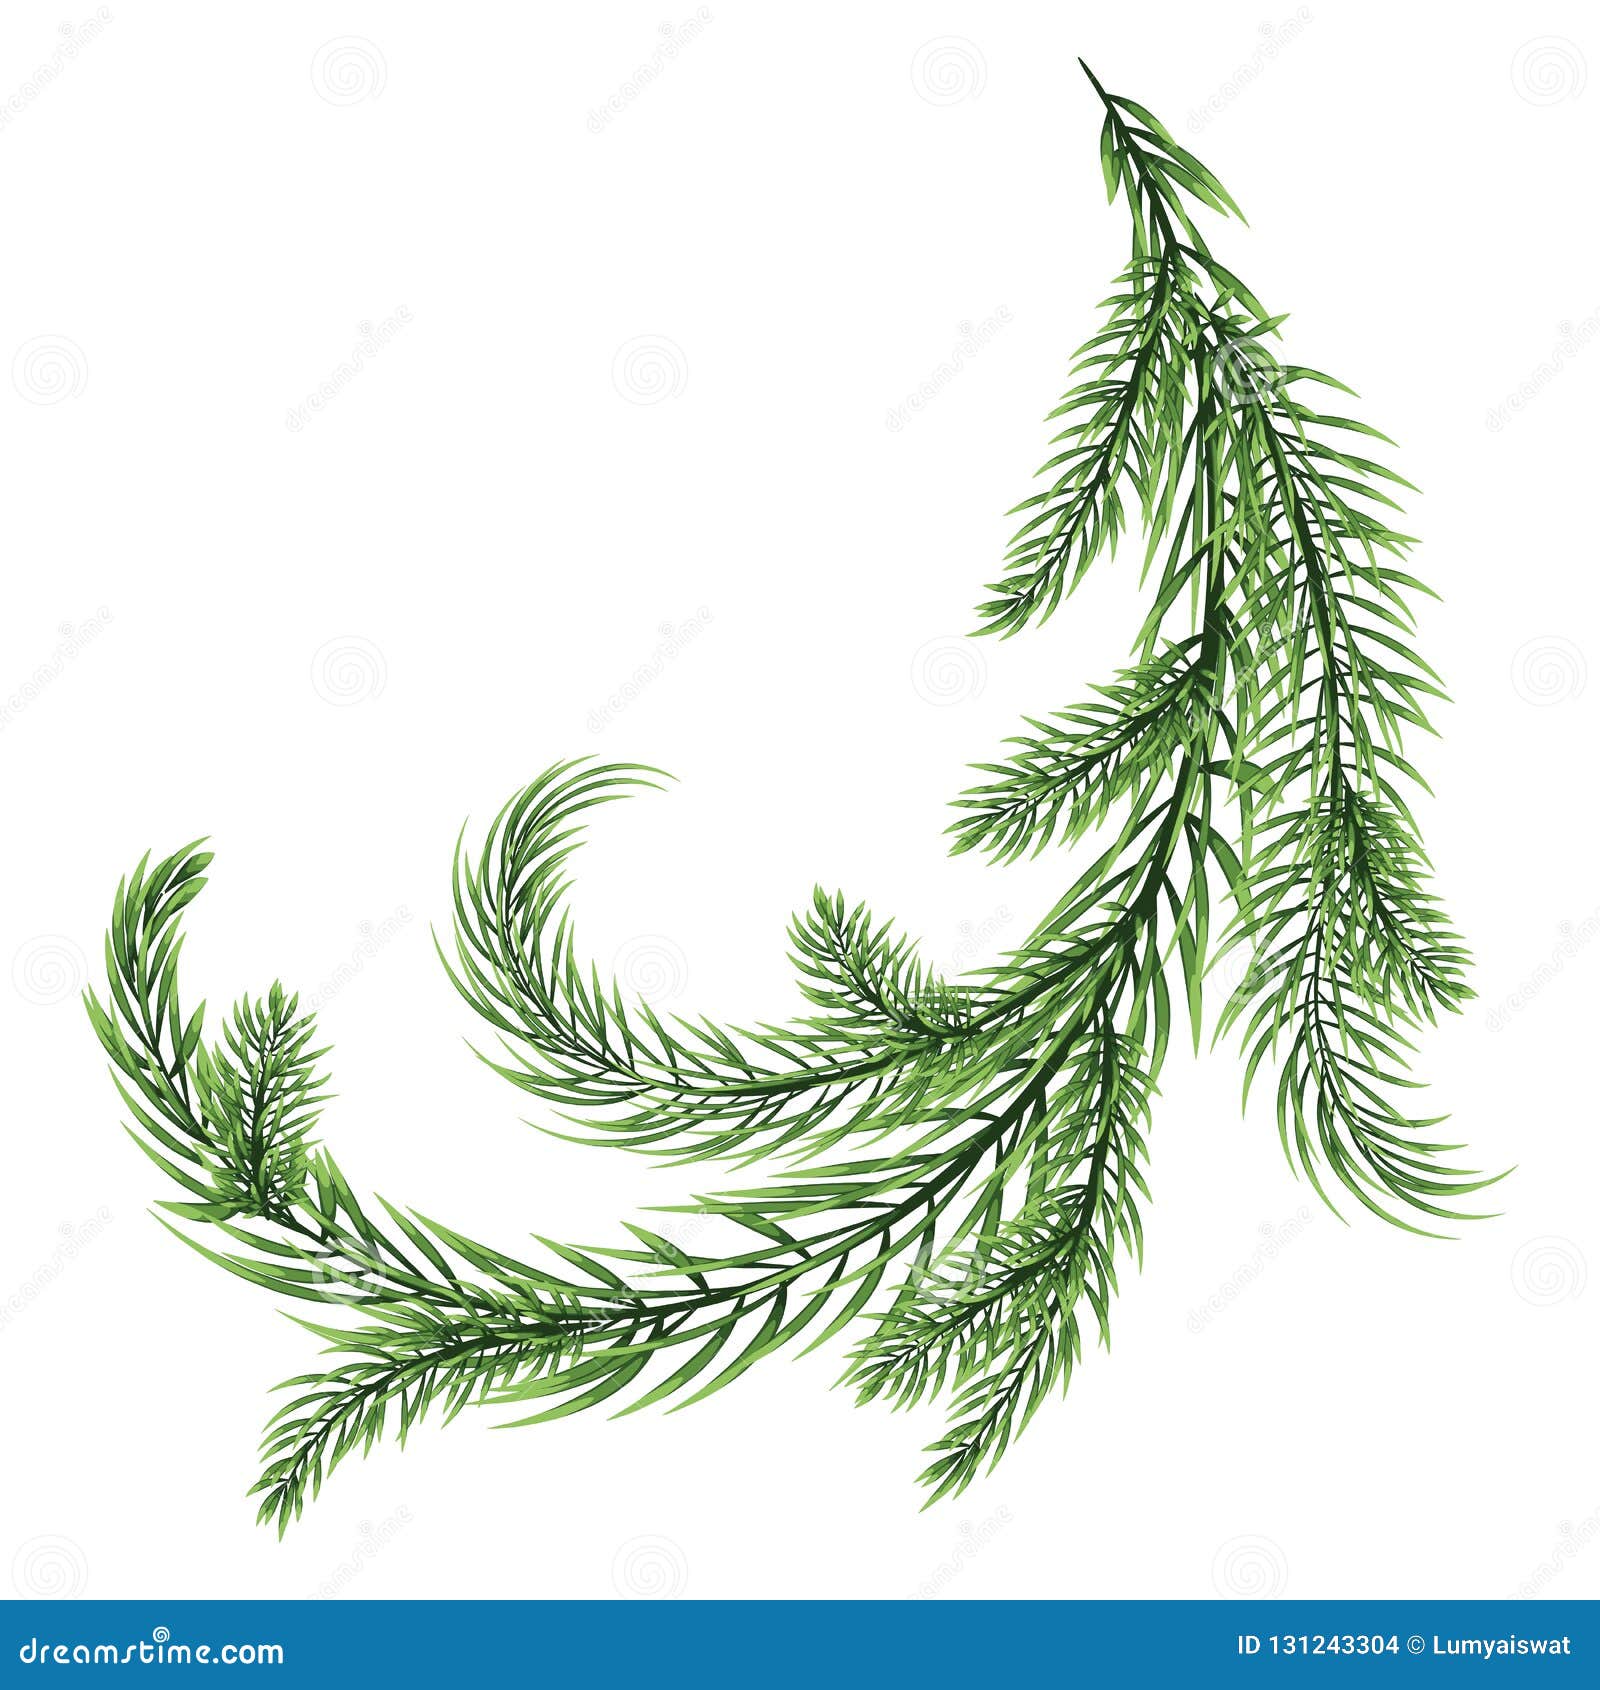 fir branch  on white background